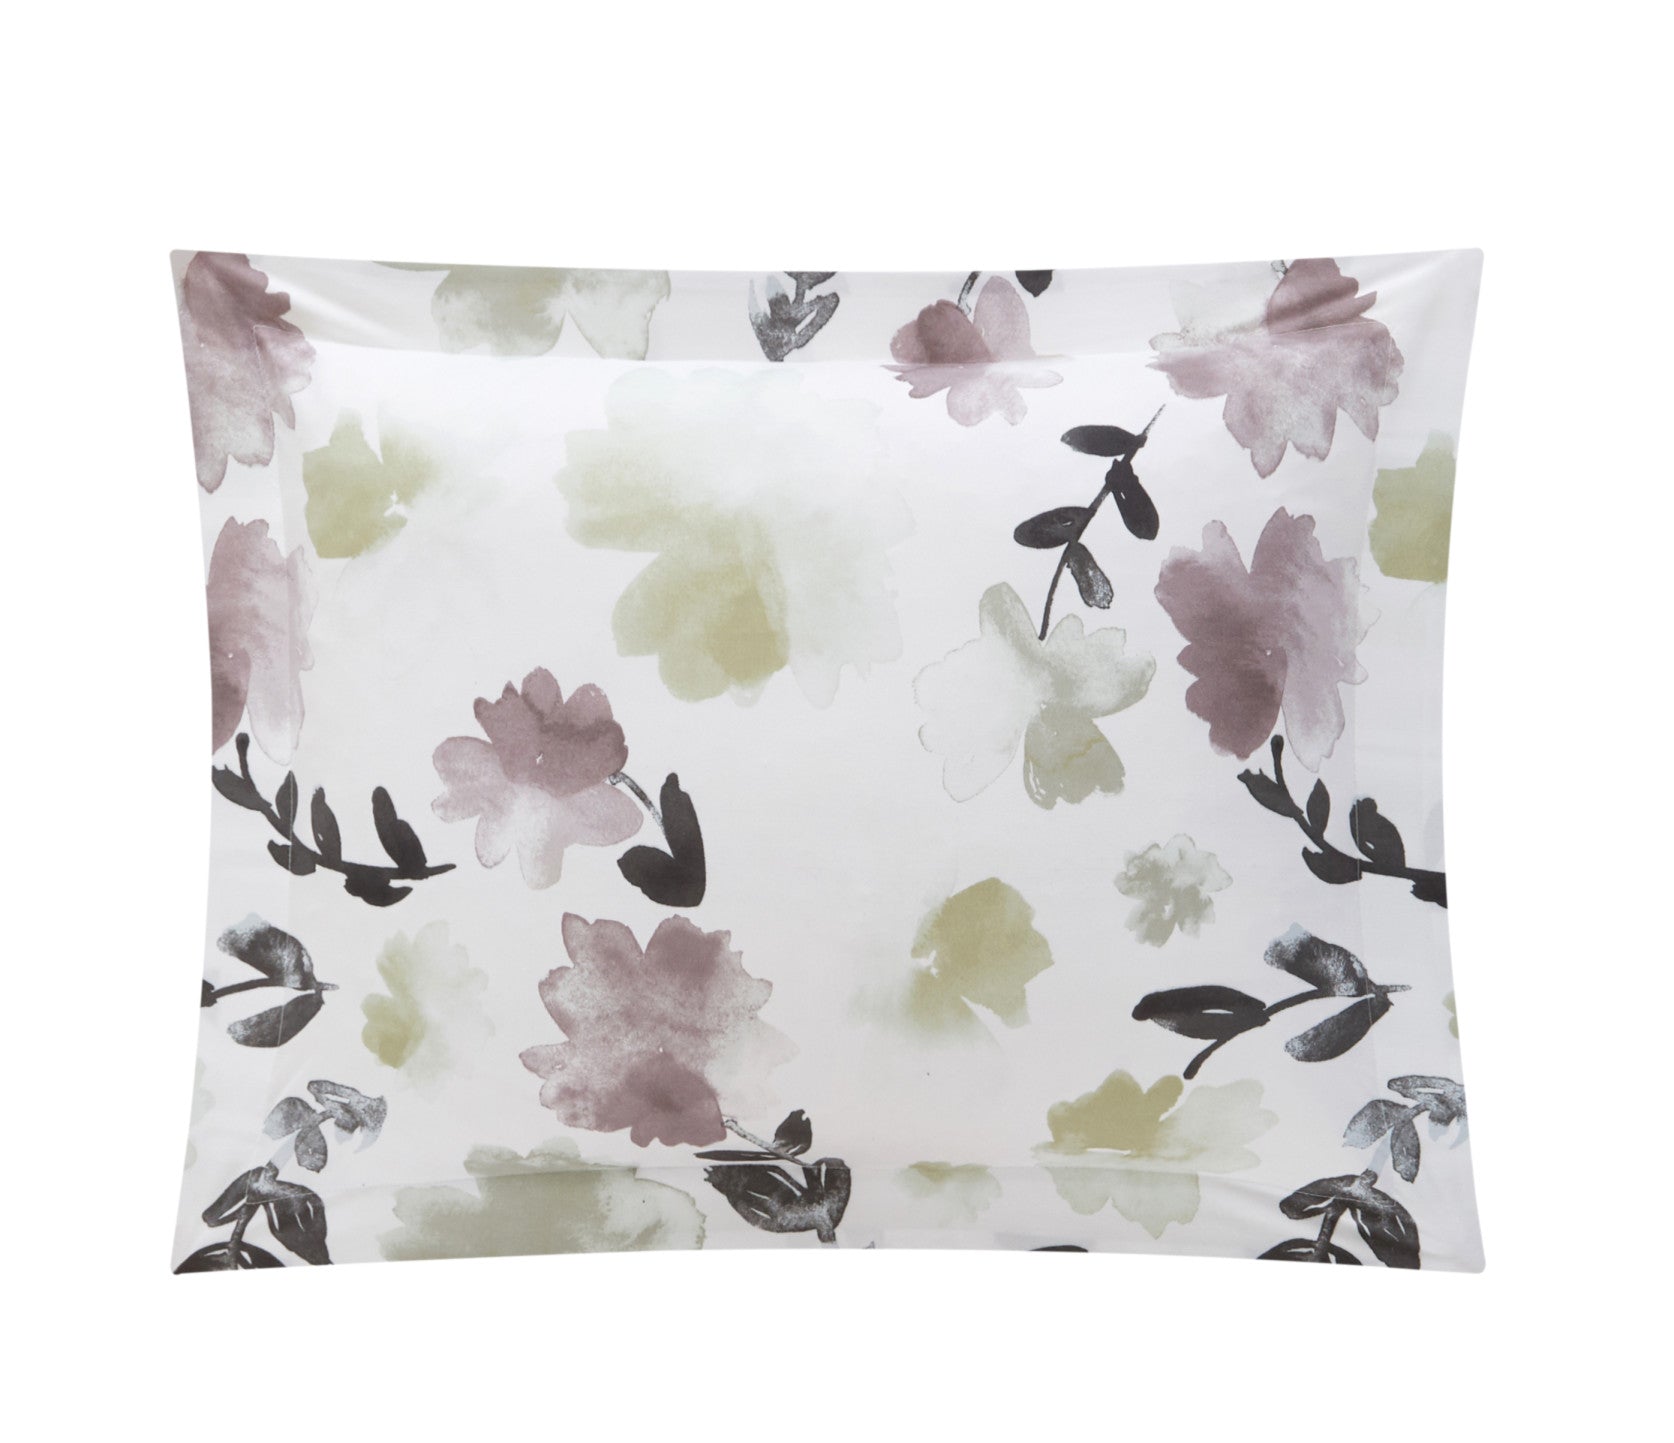 Devon Green 4 Piece Reversible Watercolor Floral Print Comforter Set